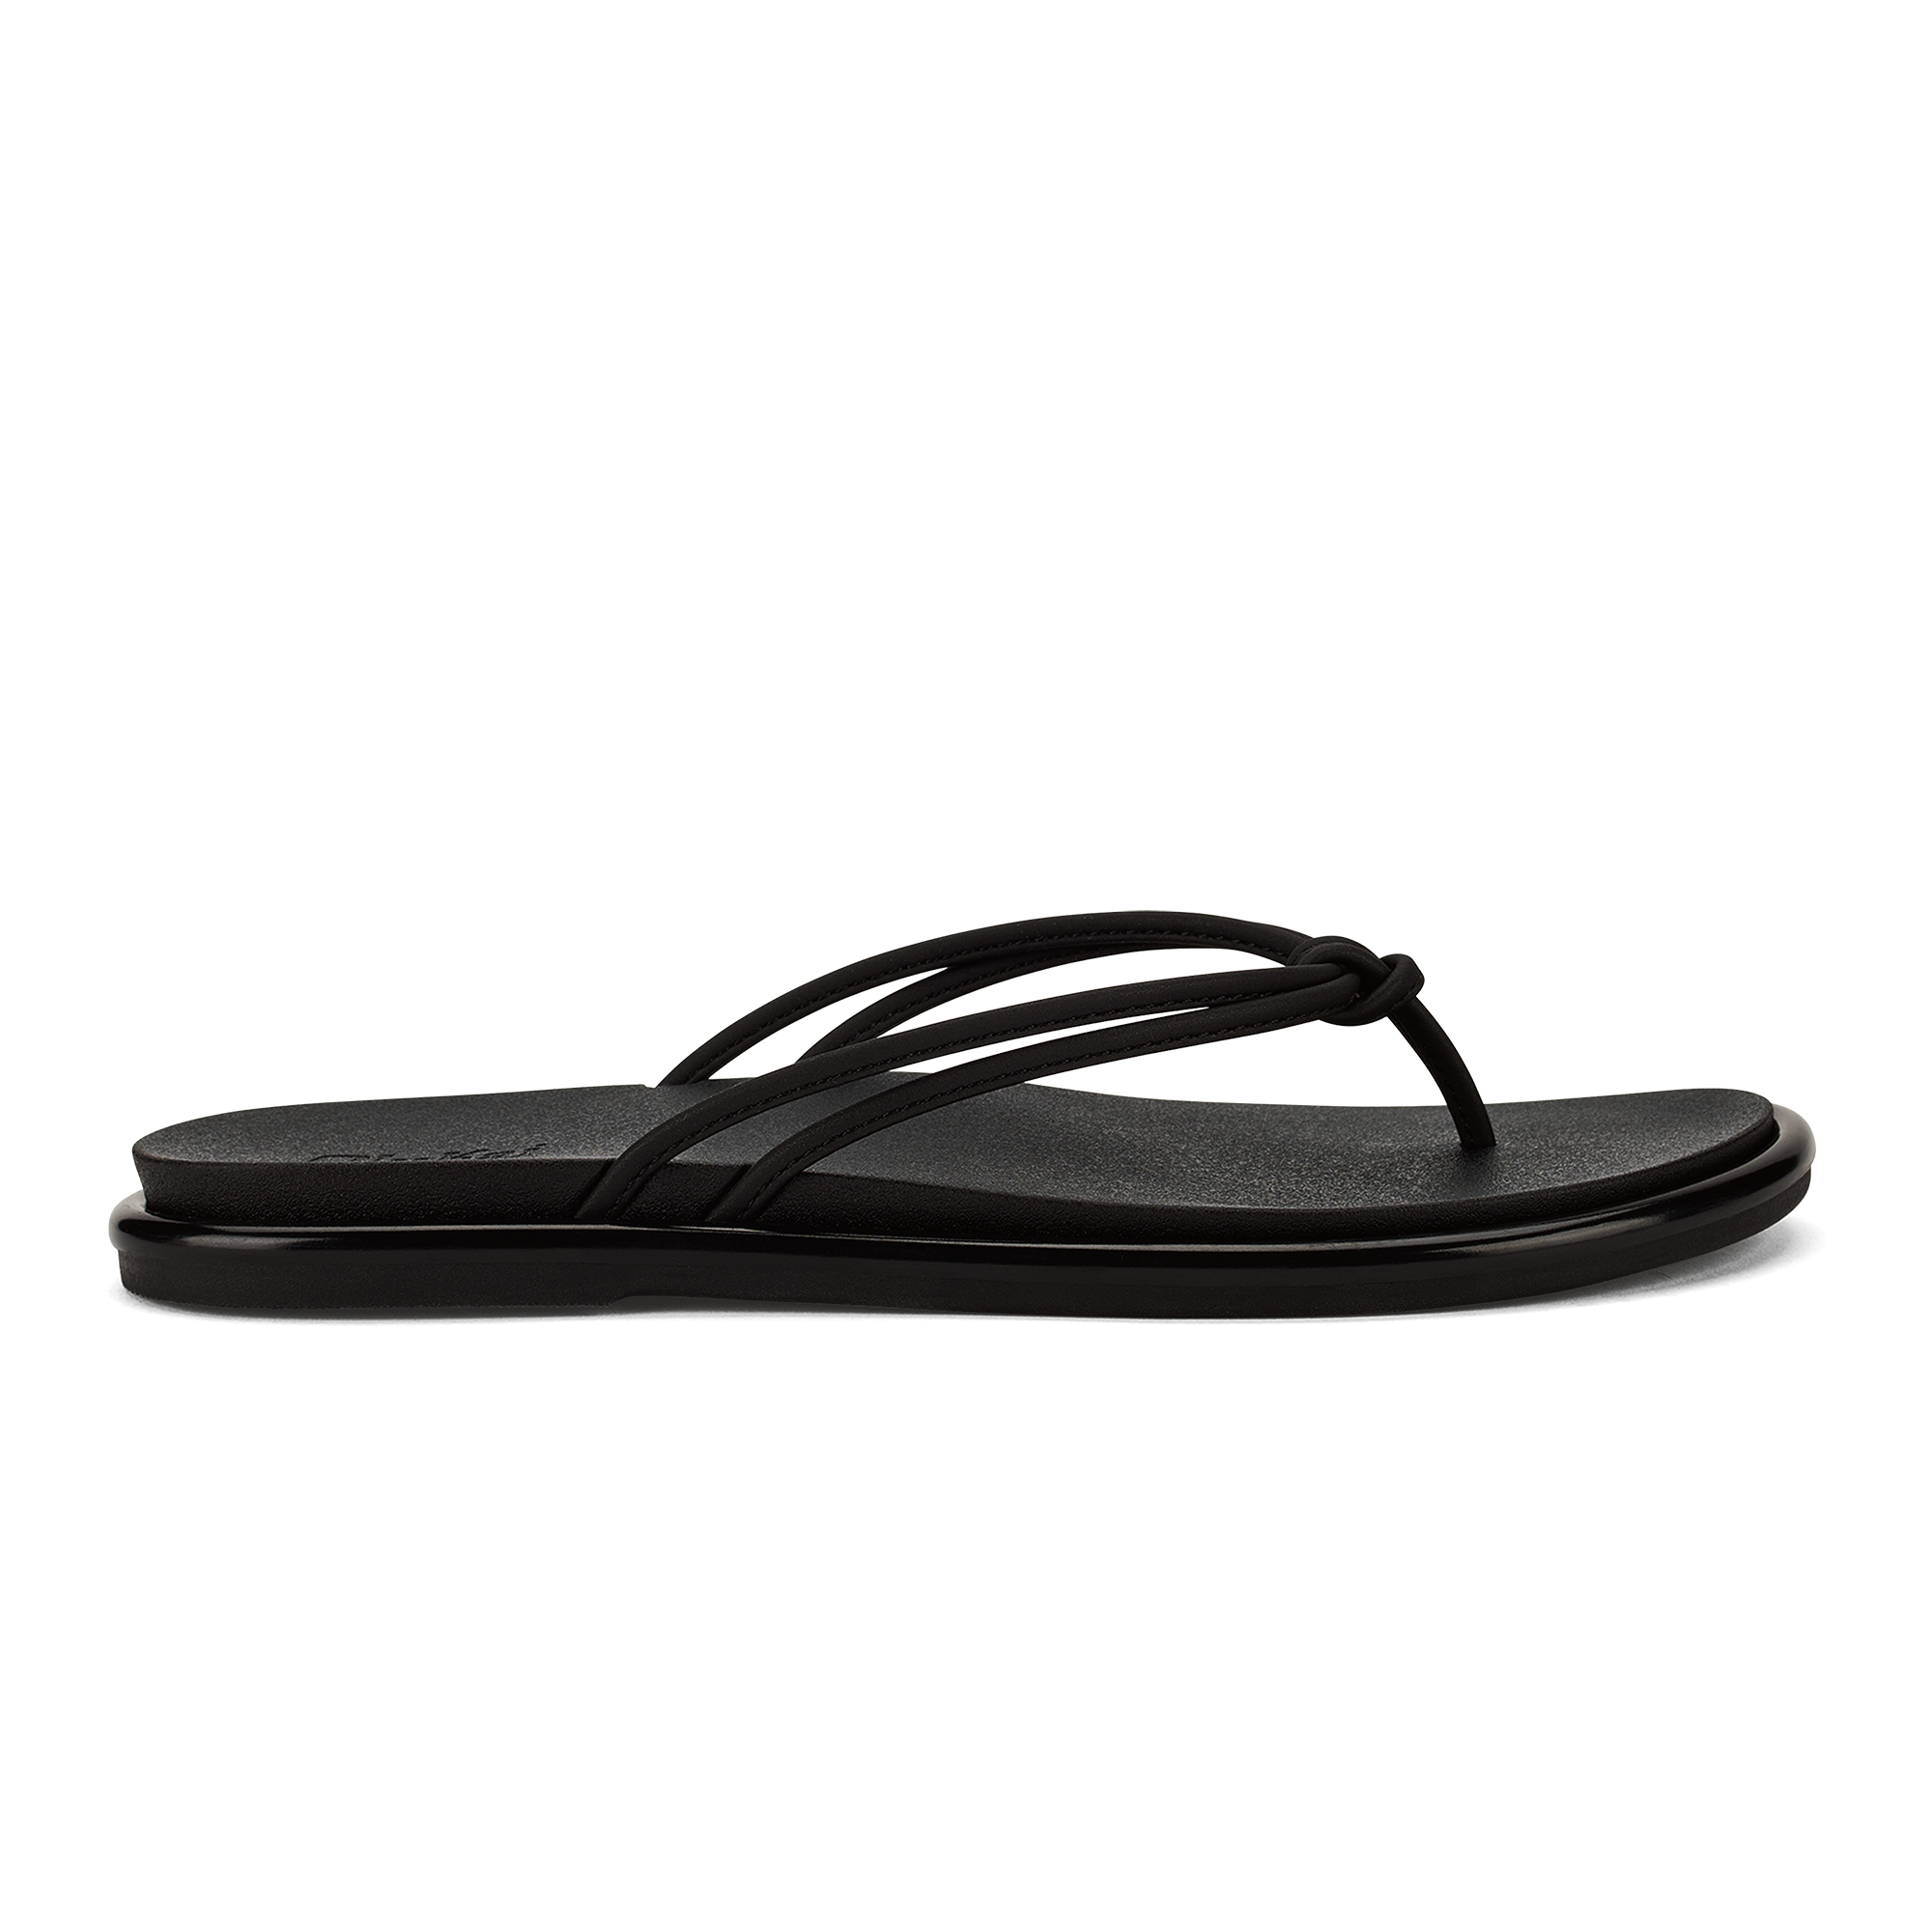  OLUKAI U'i Women's Beach Sandals, Premium Leather Flip-Flop  Slides, Braided Palm Inspired Design, Compression Molded Footbed,  Sahara/Sahara, 6